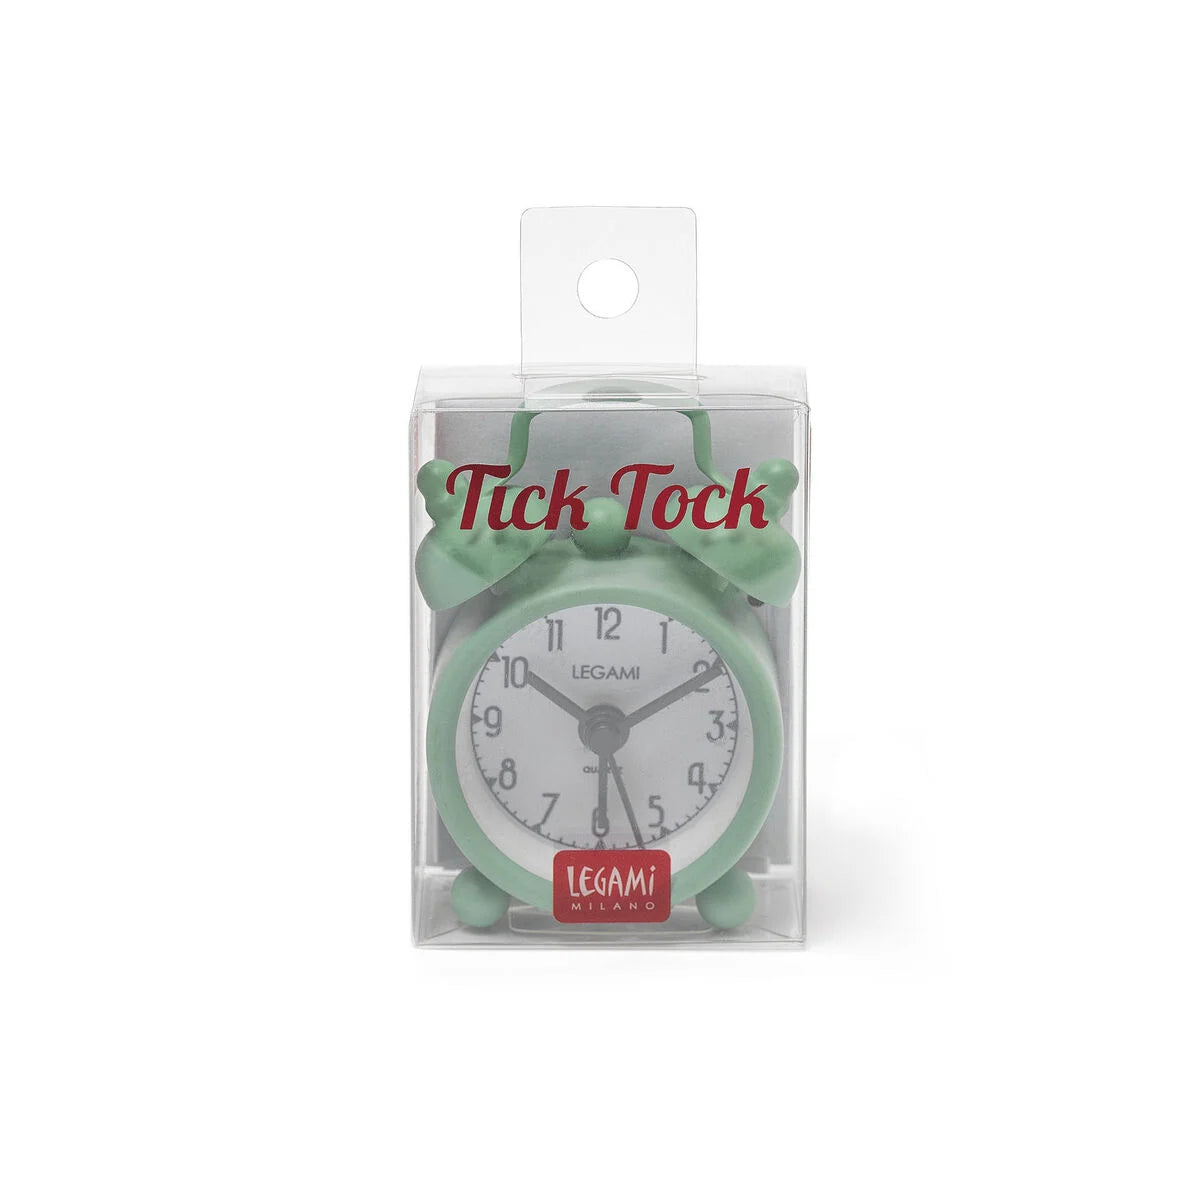 Fab Gifts | Legami Mini Tick Tock Alarm Clock - Vintage Green by Weirs of Baggot Street